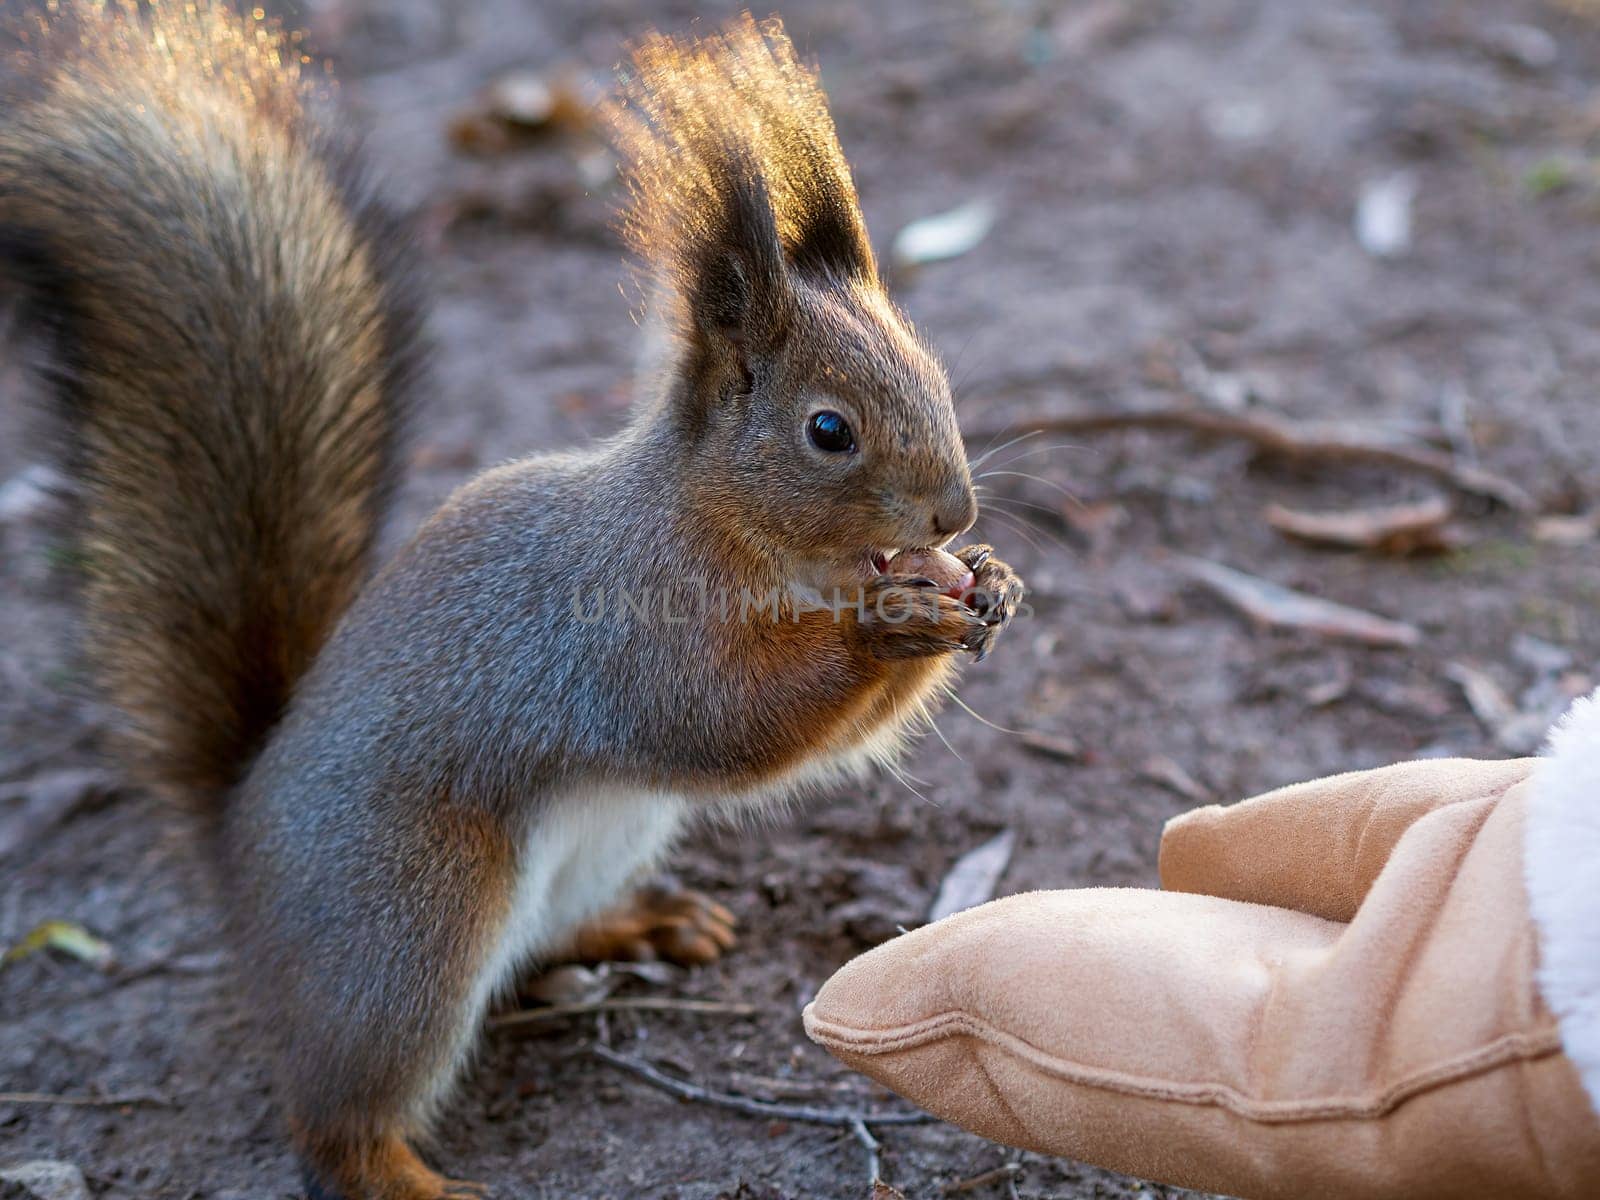 Winter squirrel eats a nut from a female hand. Eurasian red squirrel, Sciurus vulgaris.